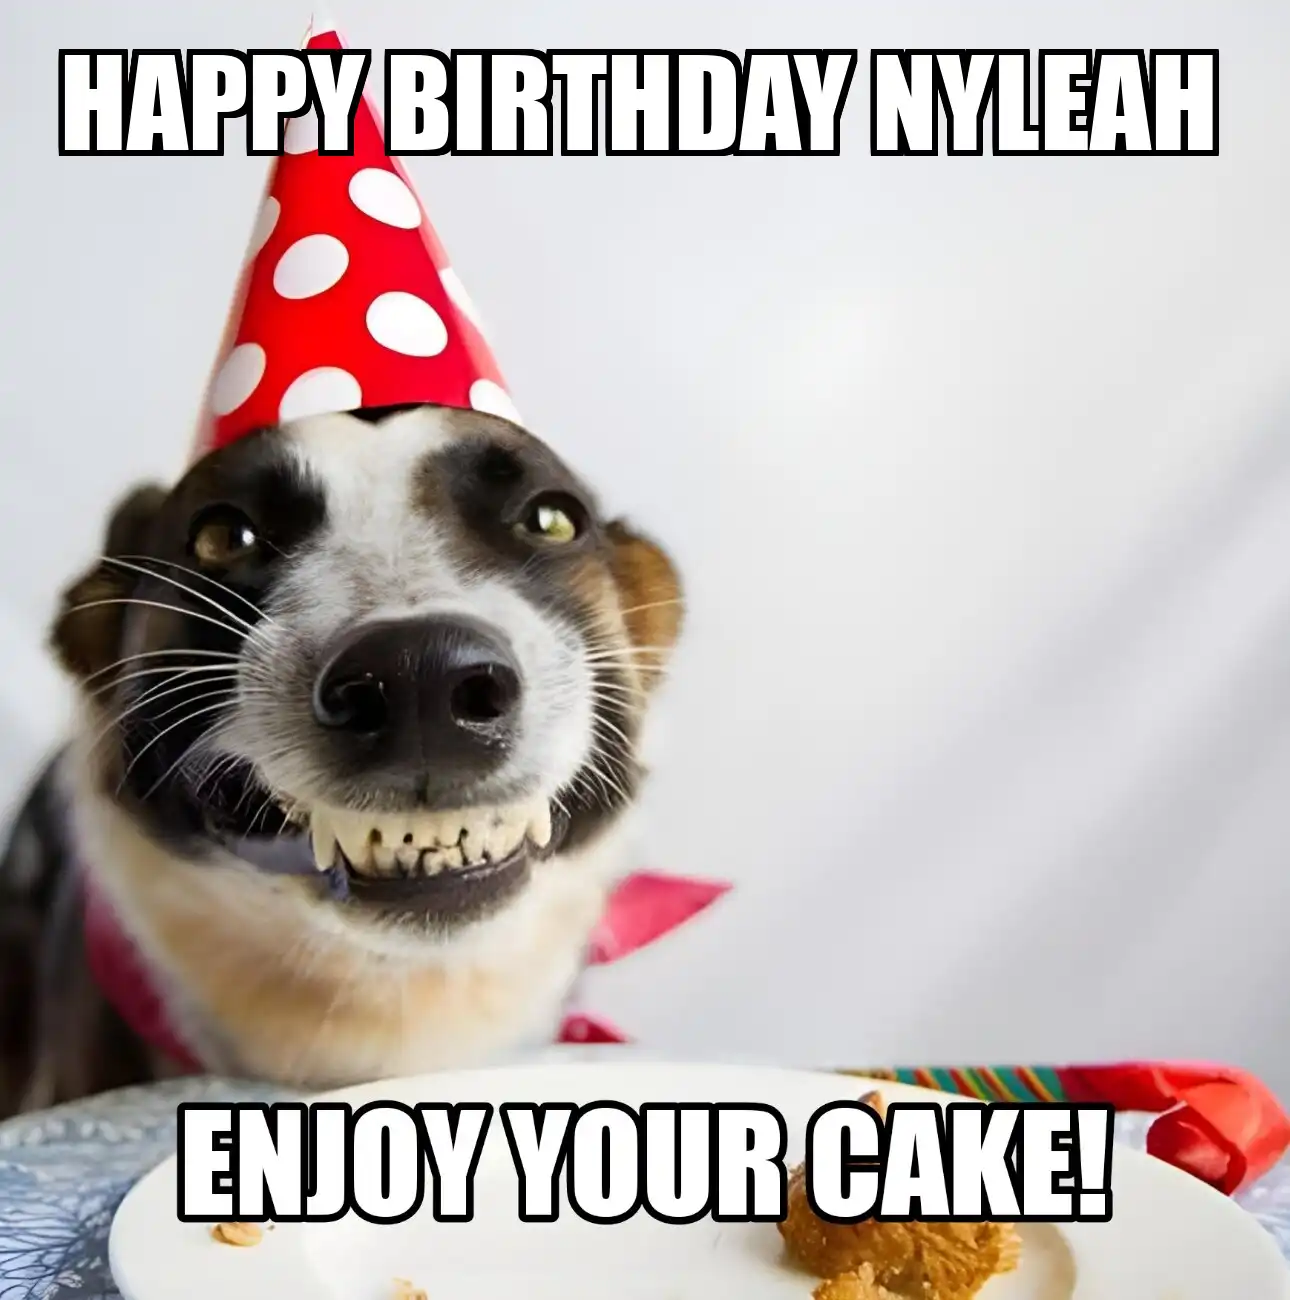 Happy Birthday Nyleah Enjoy Your Cake Dog Meme